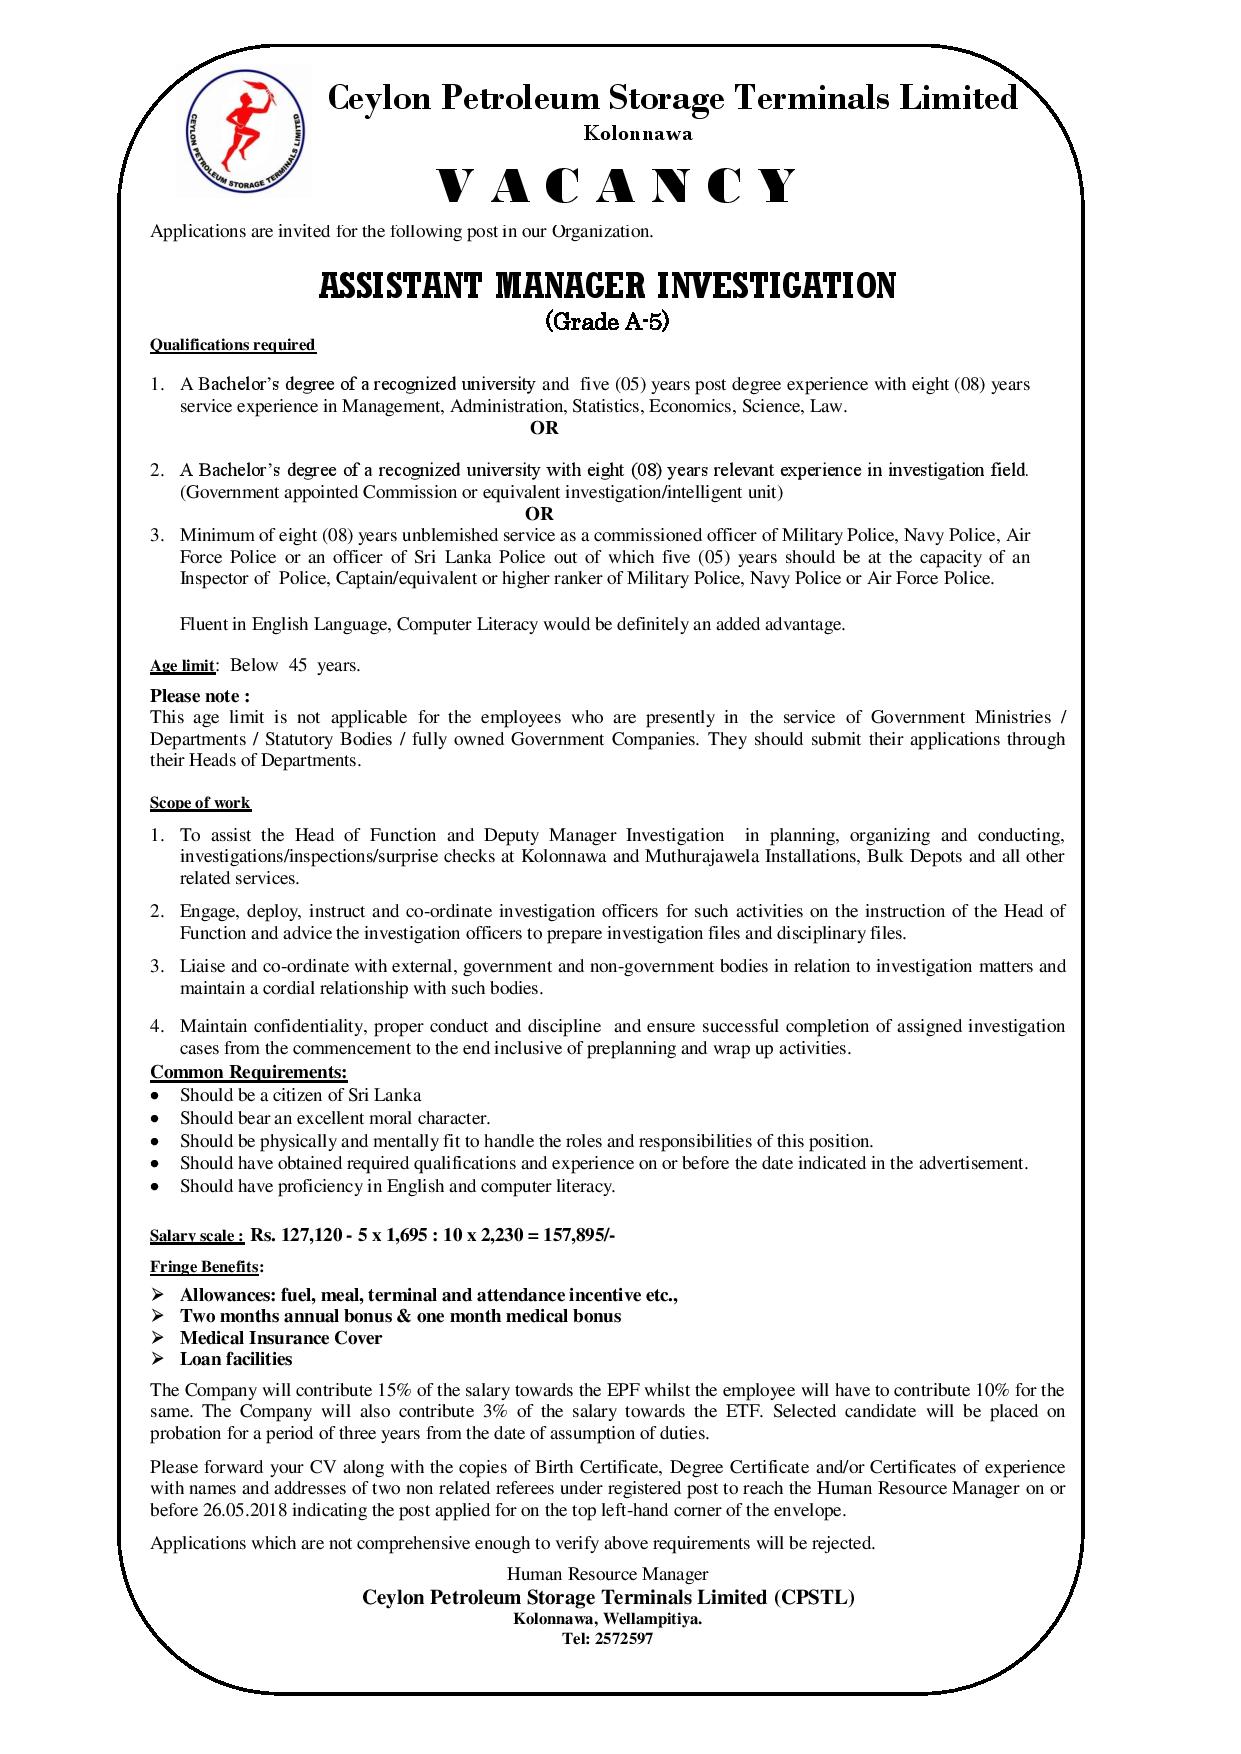 Assistant Manager Investigation - Ceylon Petroleum Storage Terminals